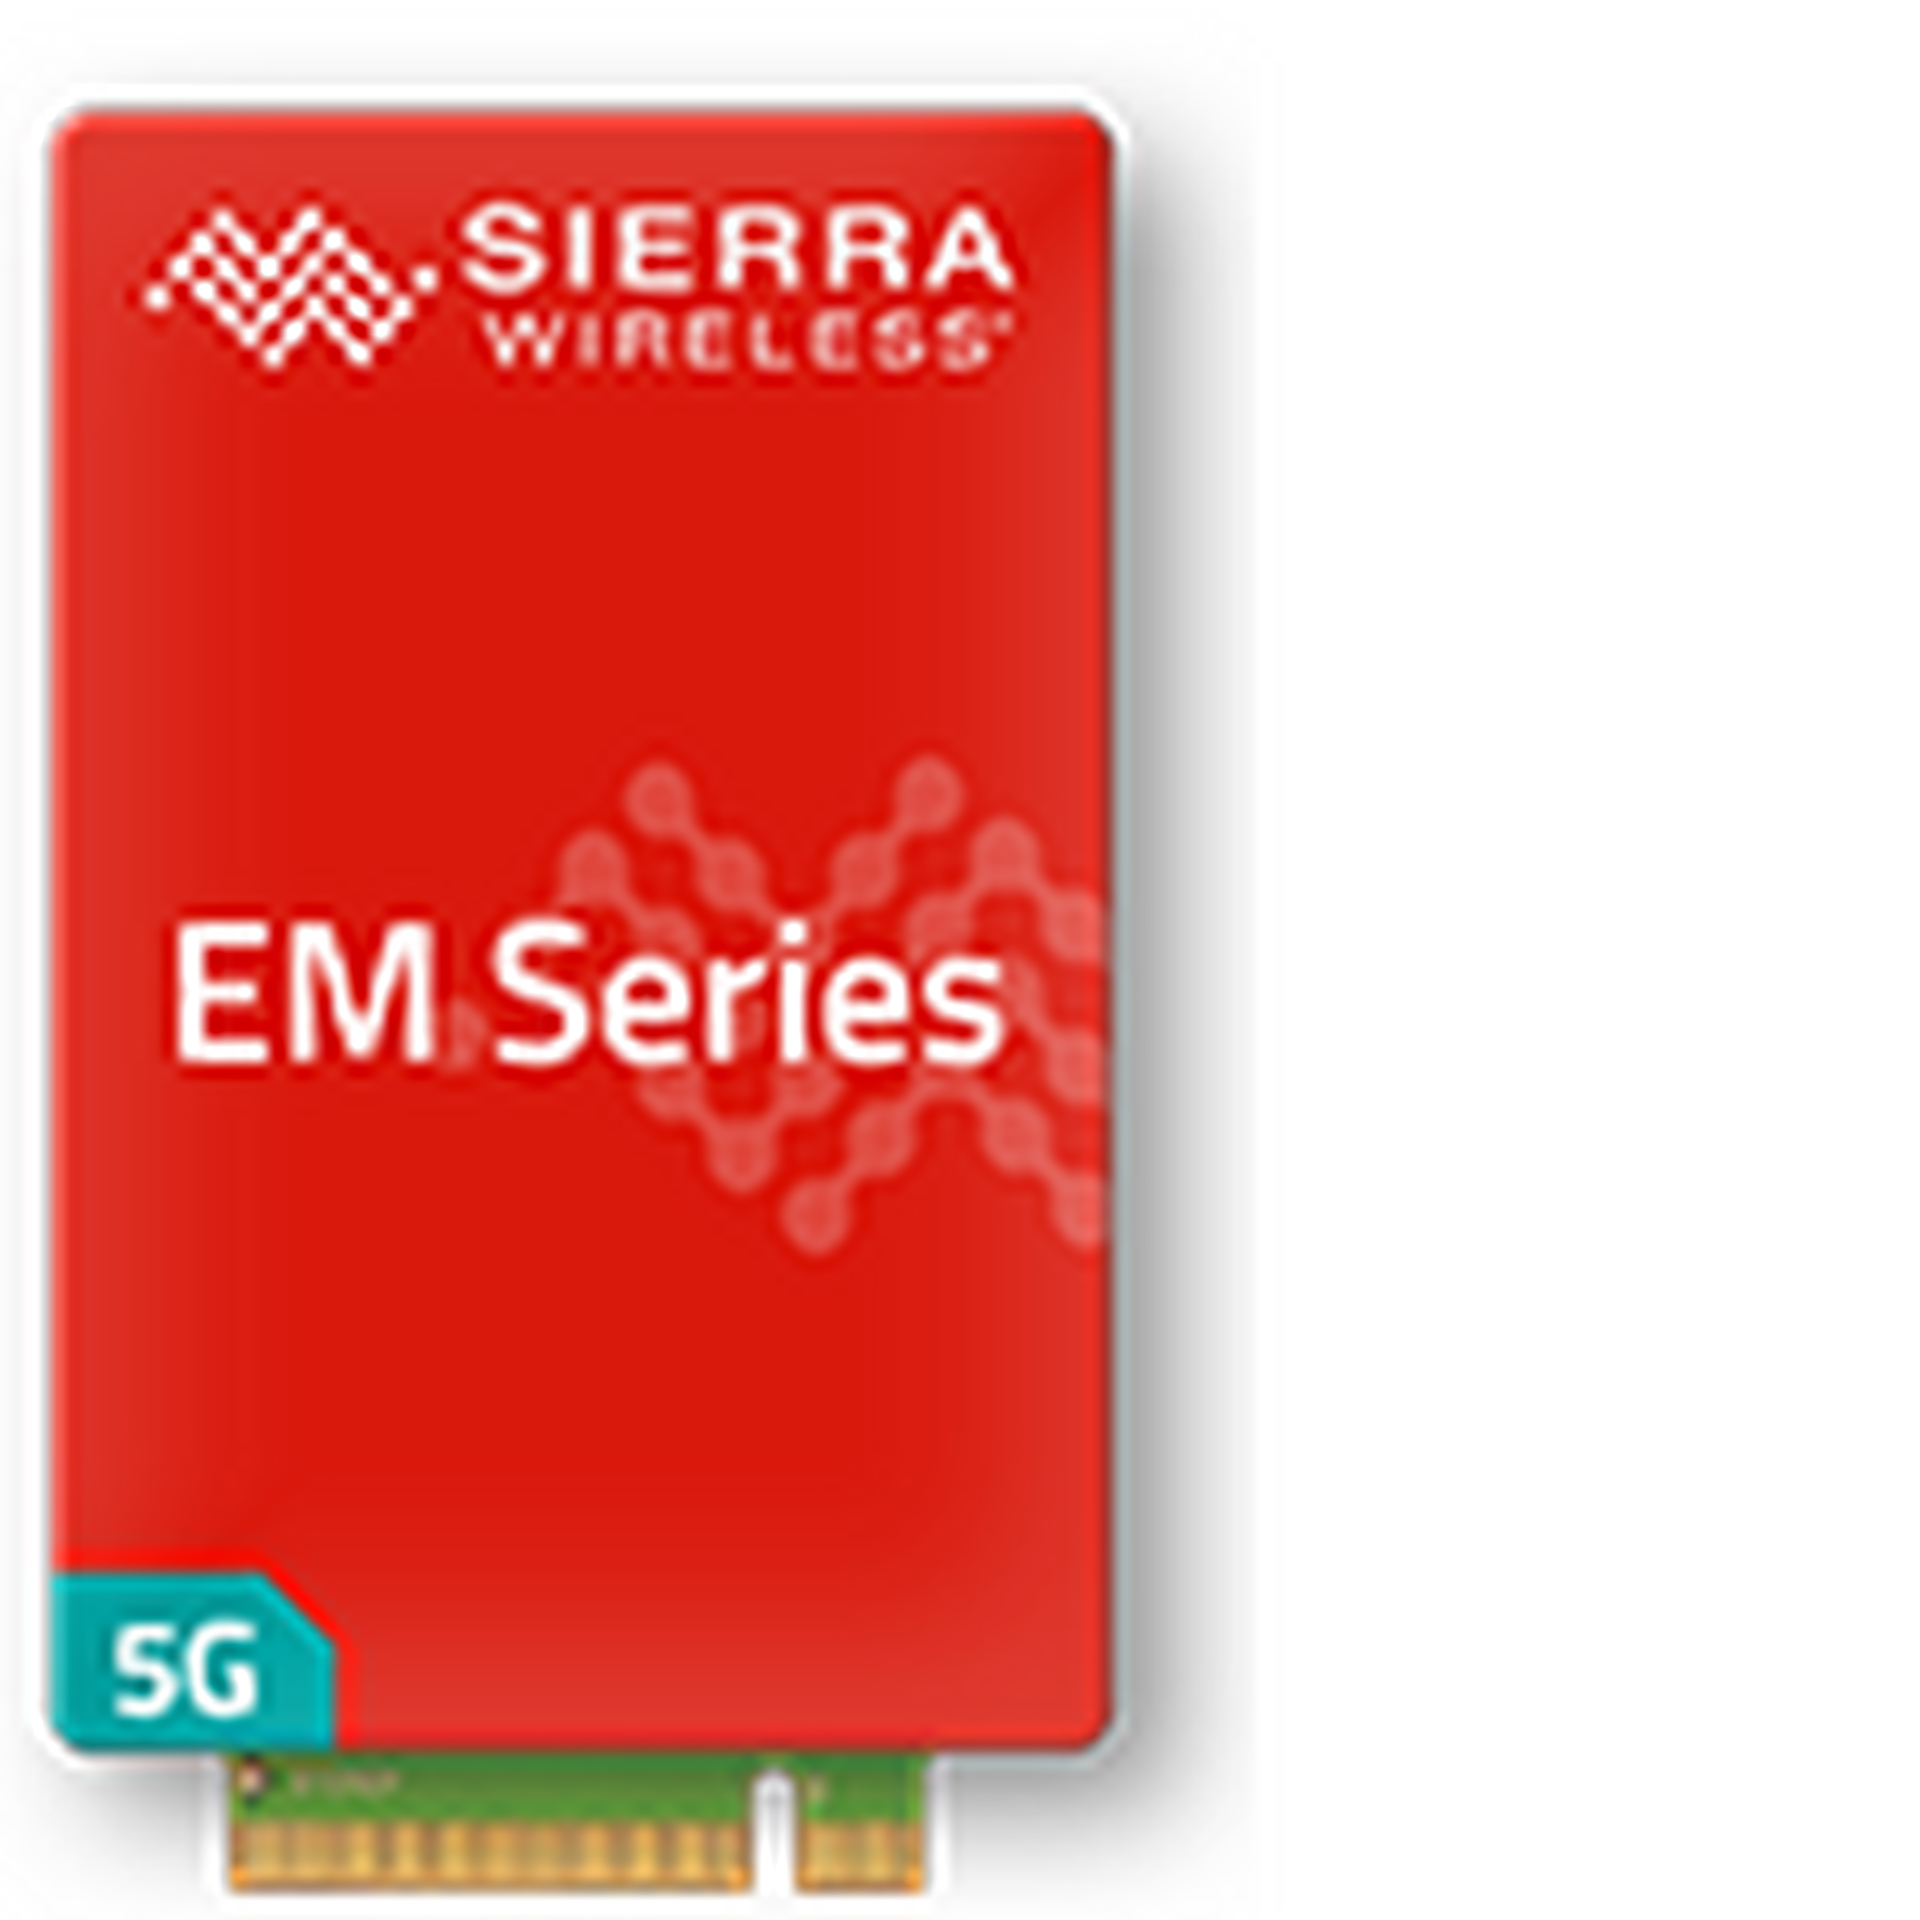 EM Series Red M 5 G 150x150 copy